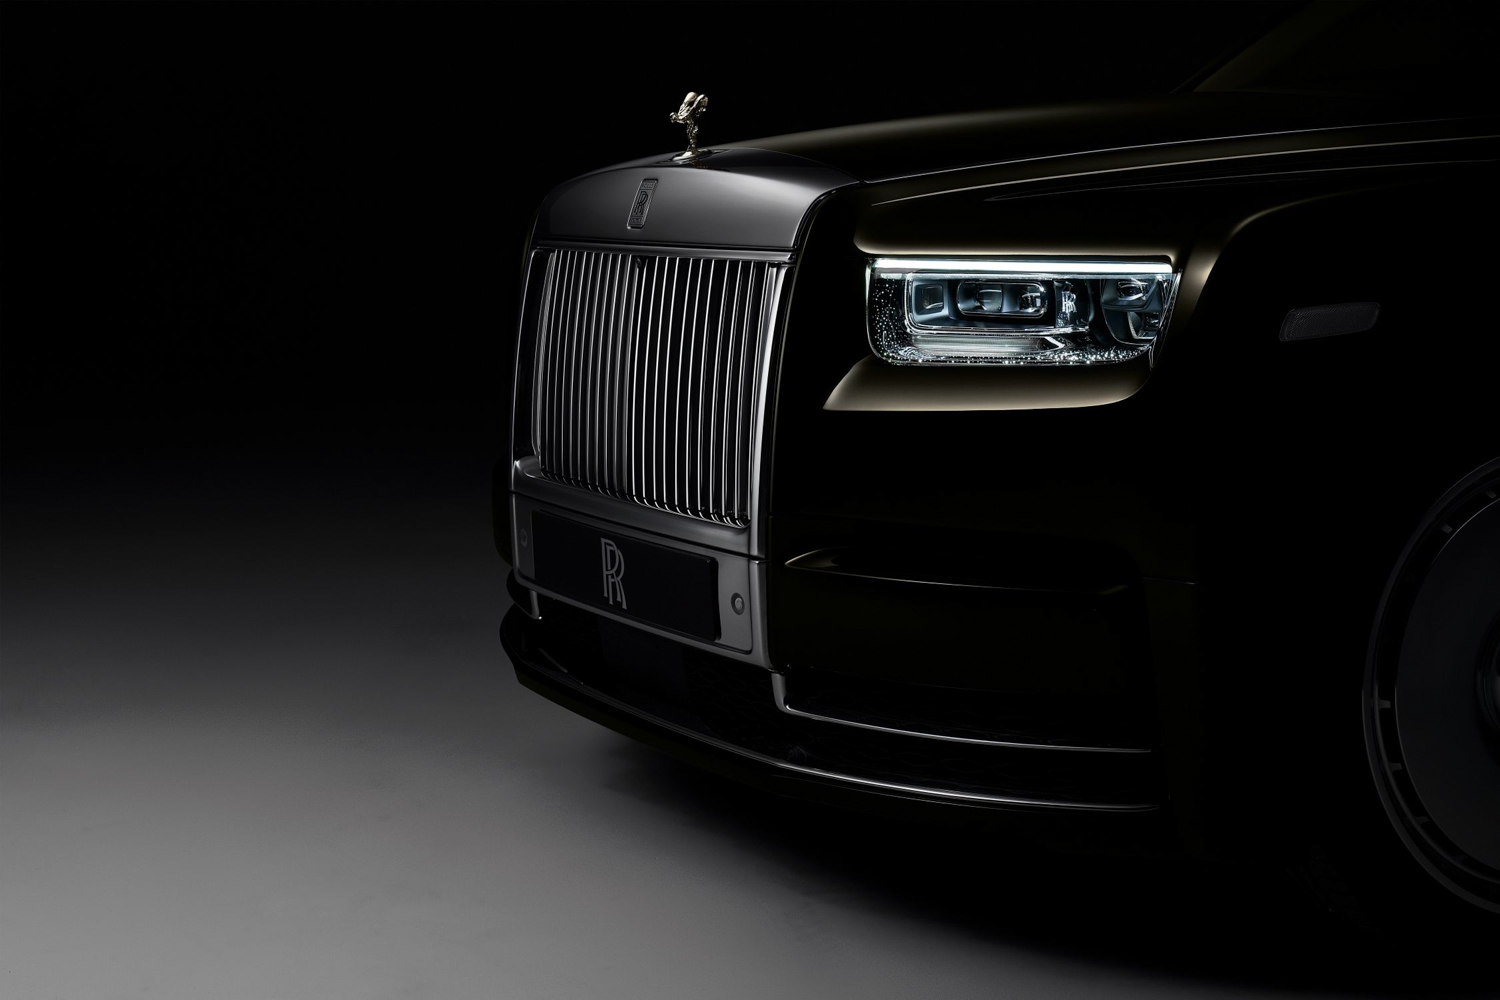 Rolls-Royce Phantom gets a facelift